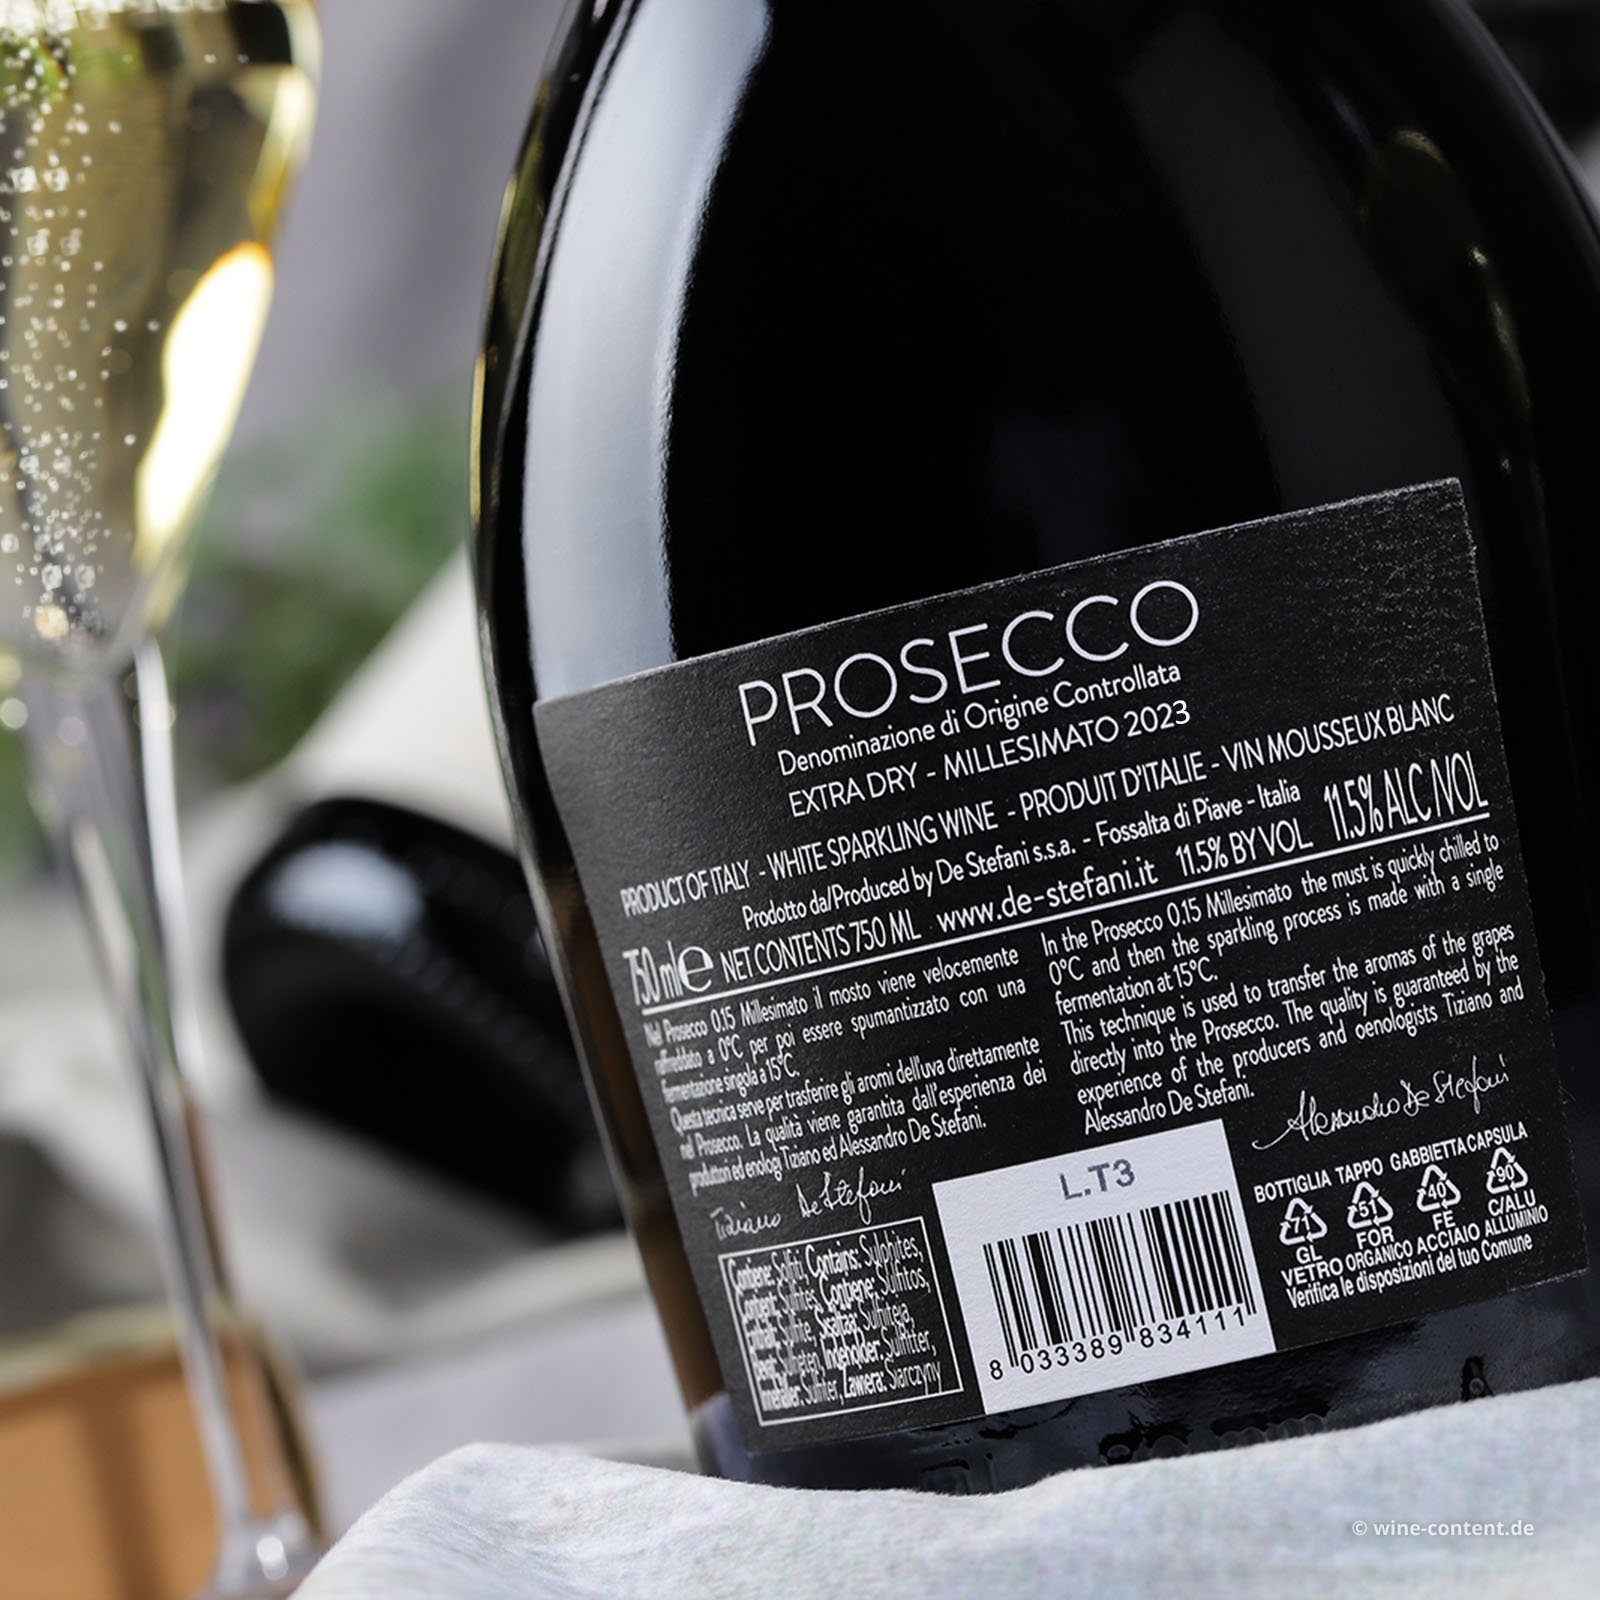 Prosecco 2023 0.15 Extra Dry